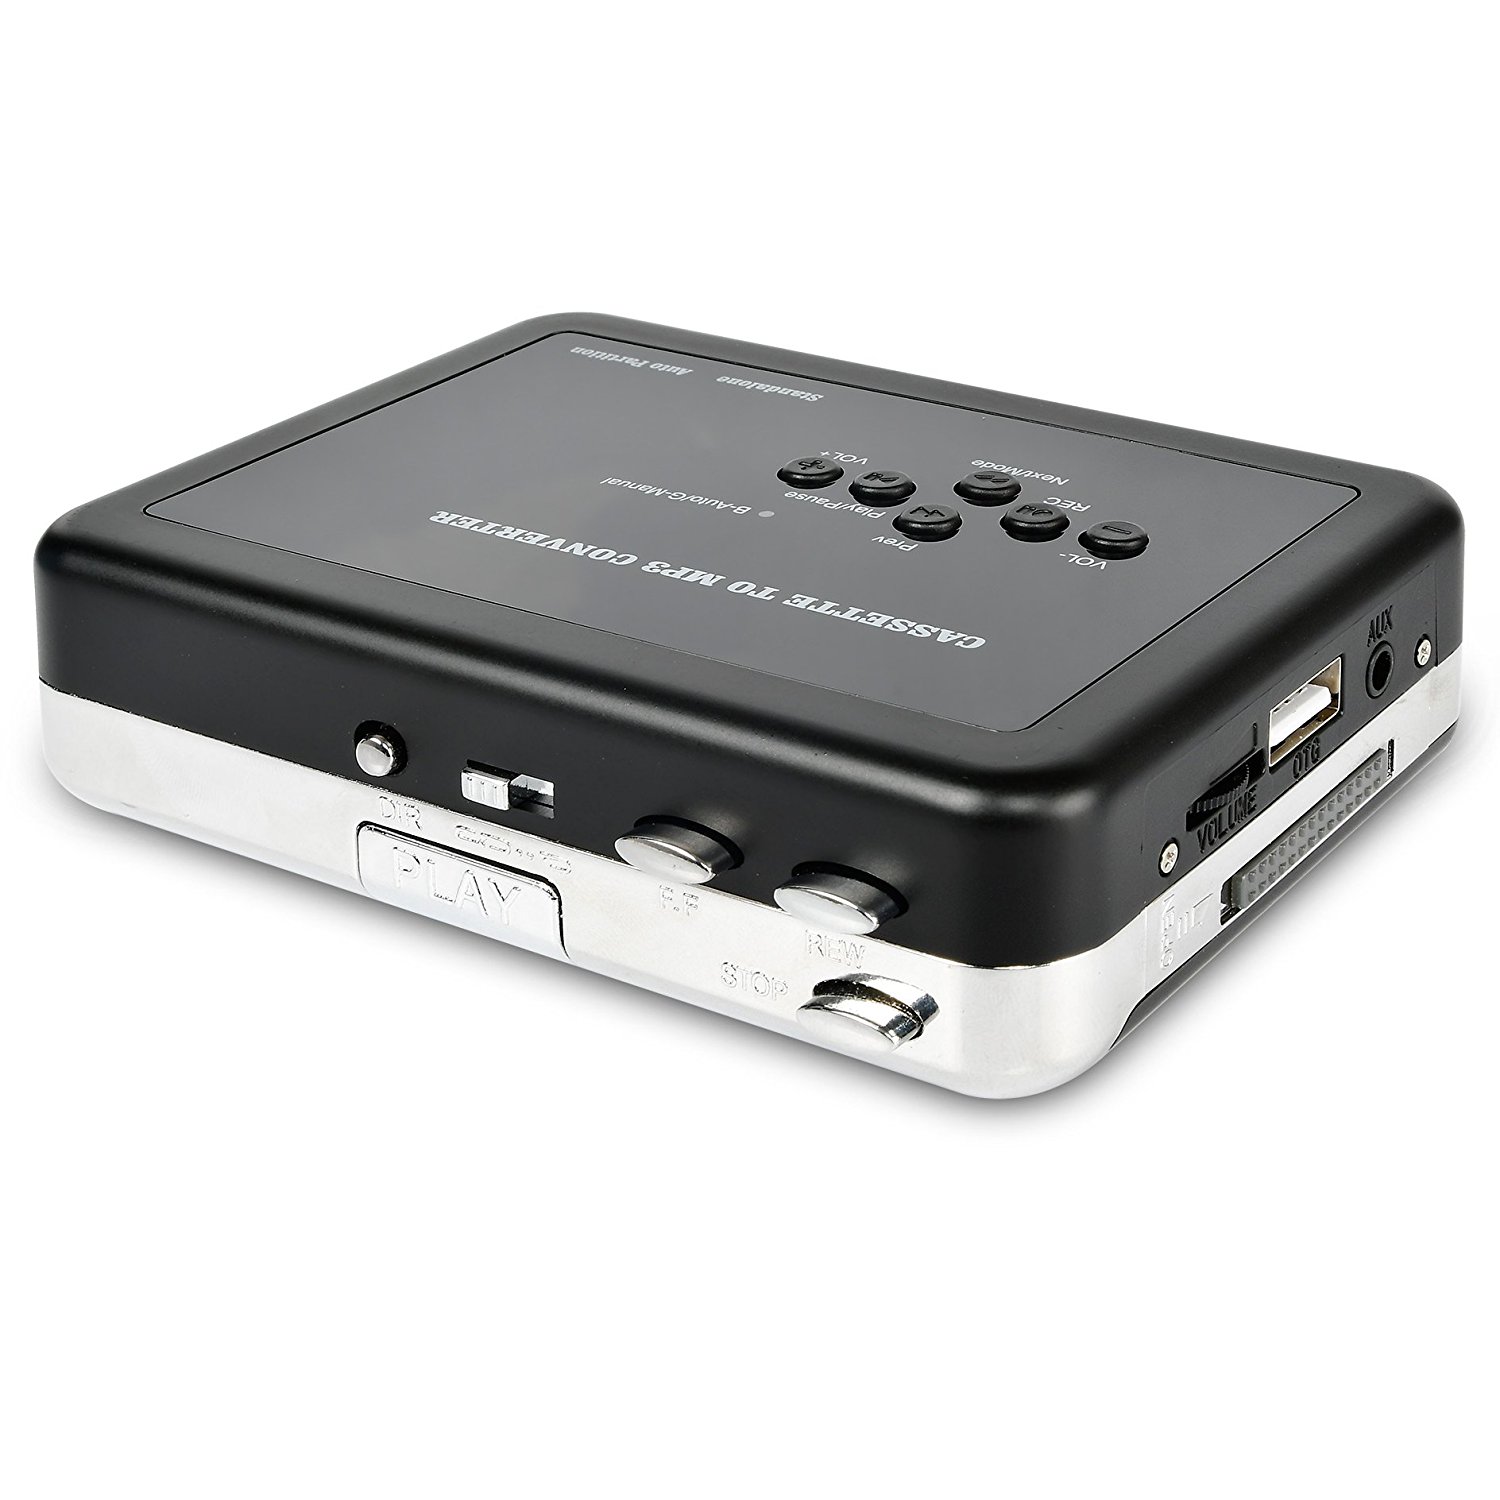 DIGITNOW Portable Cassette Player Recorders, Standalone Digital